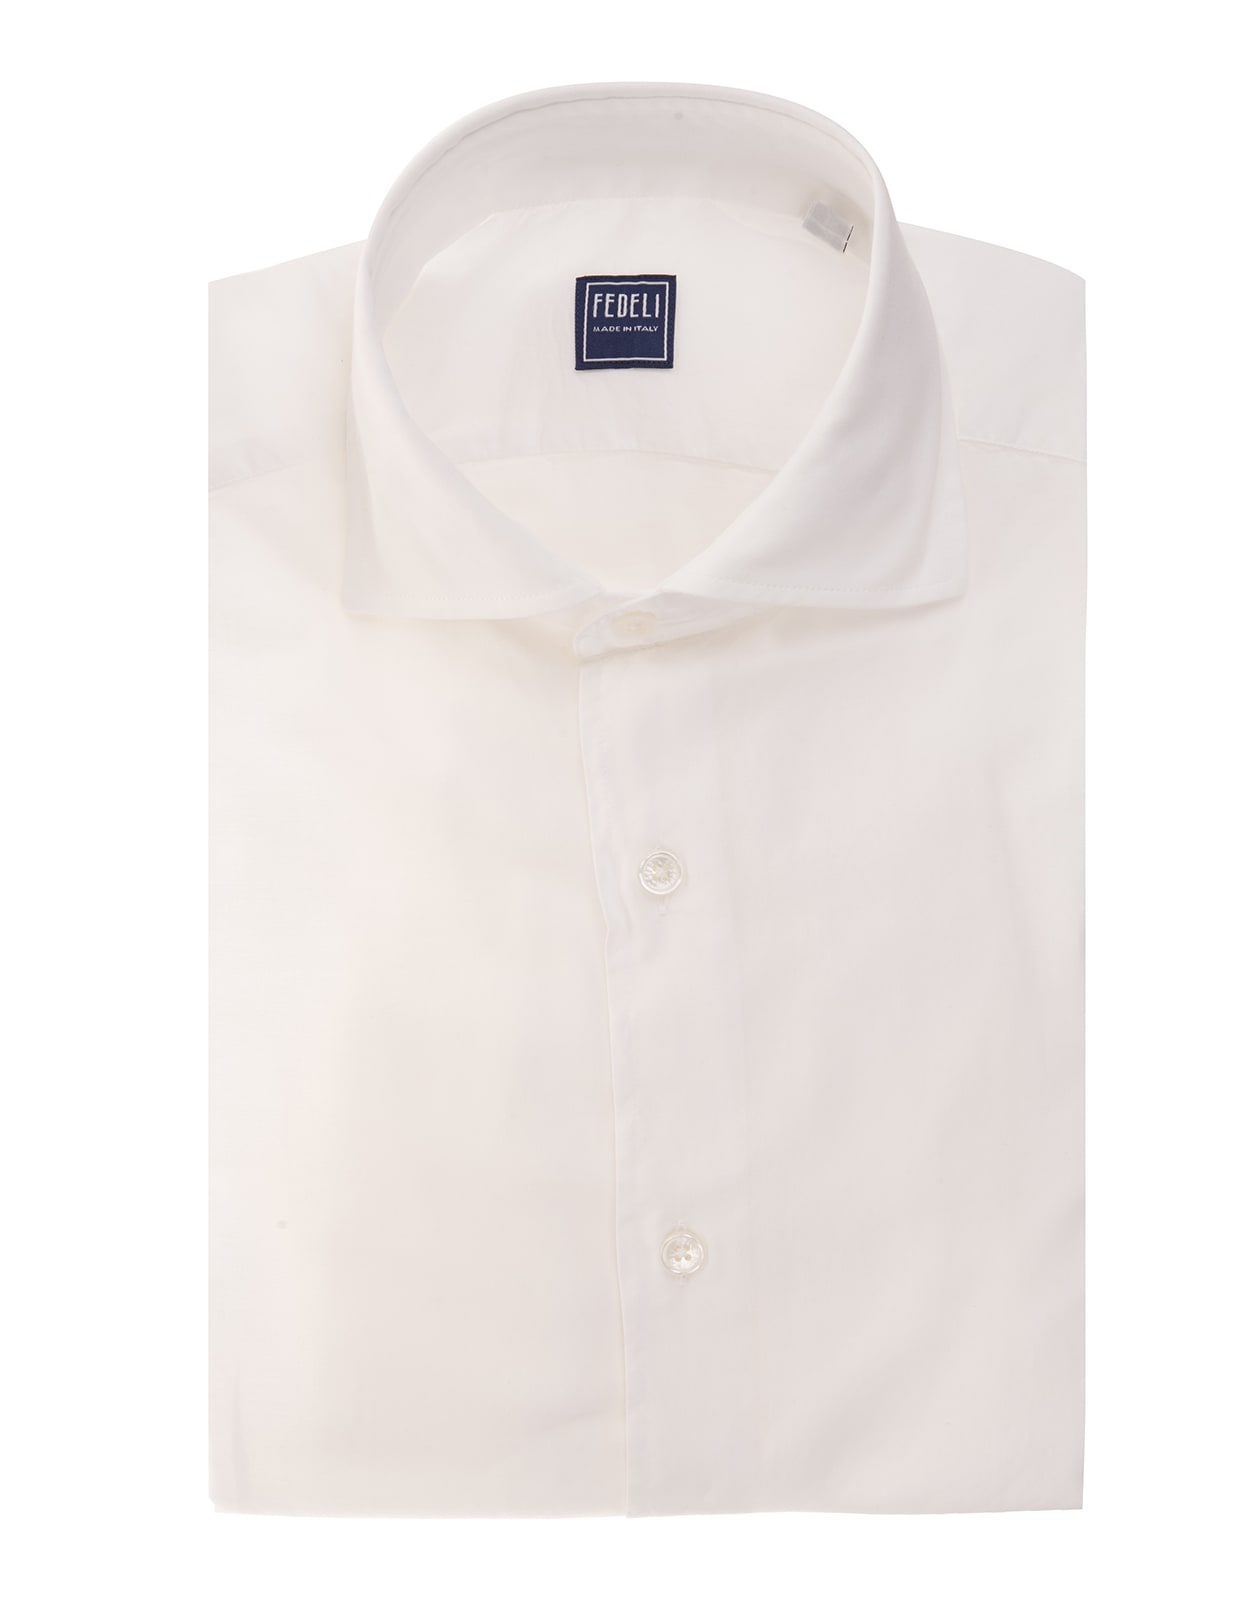 Fedeli Man Optical White Lightweight Cotton Shirt